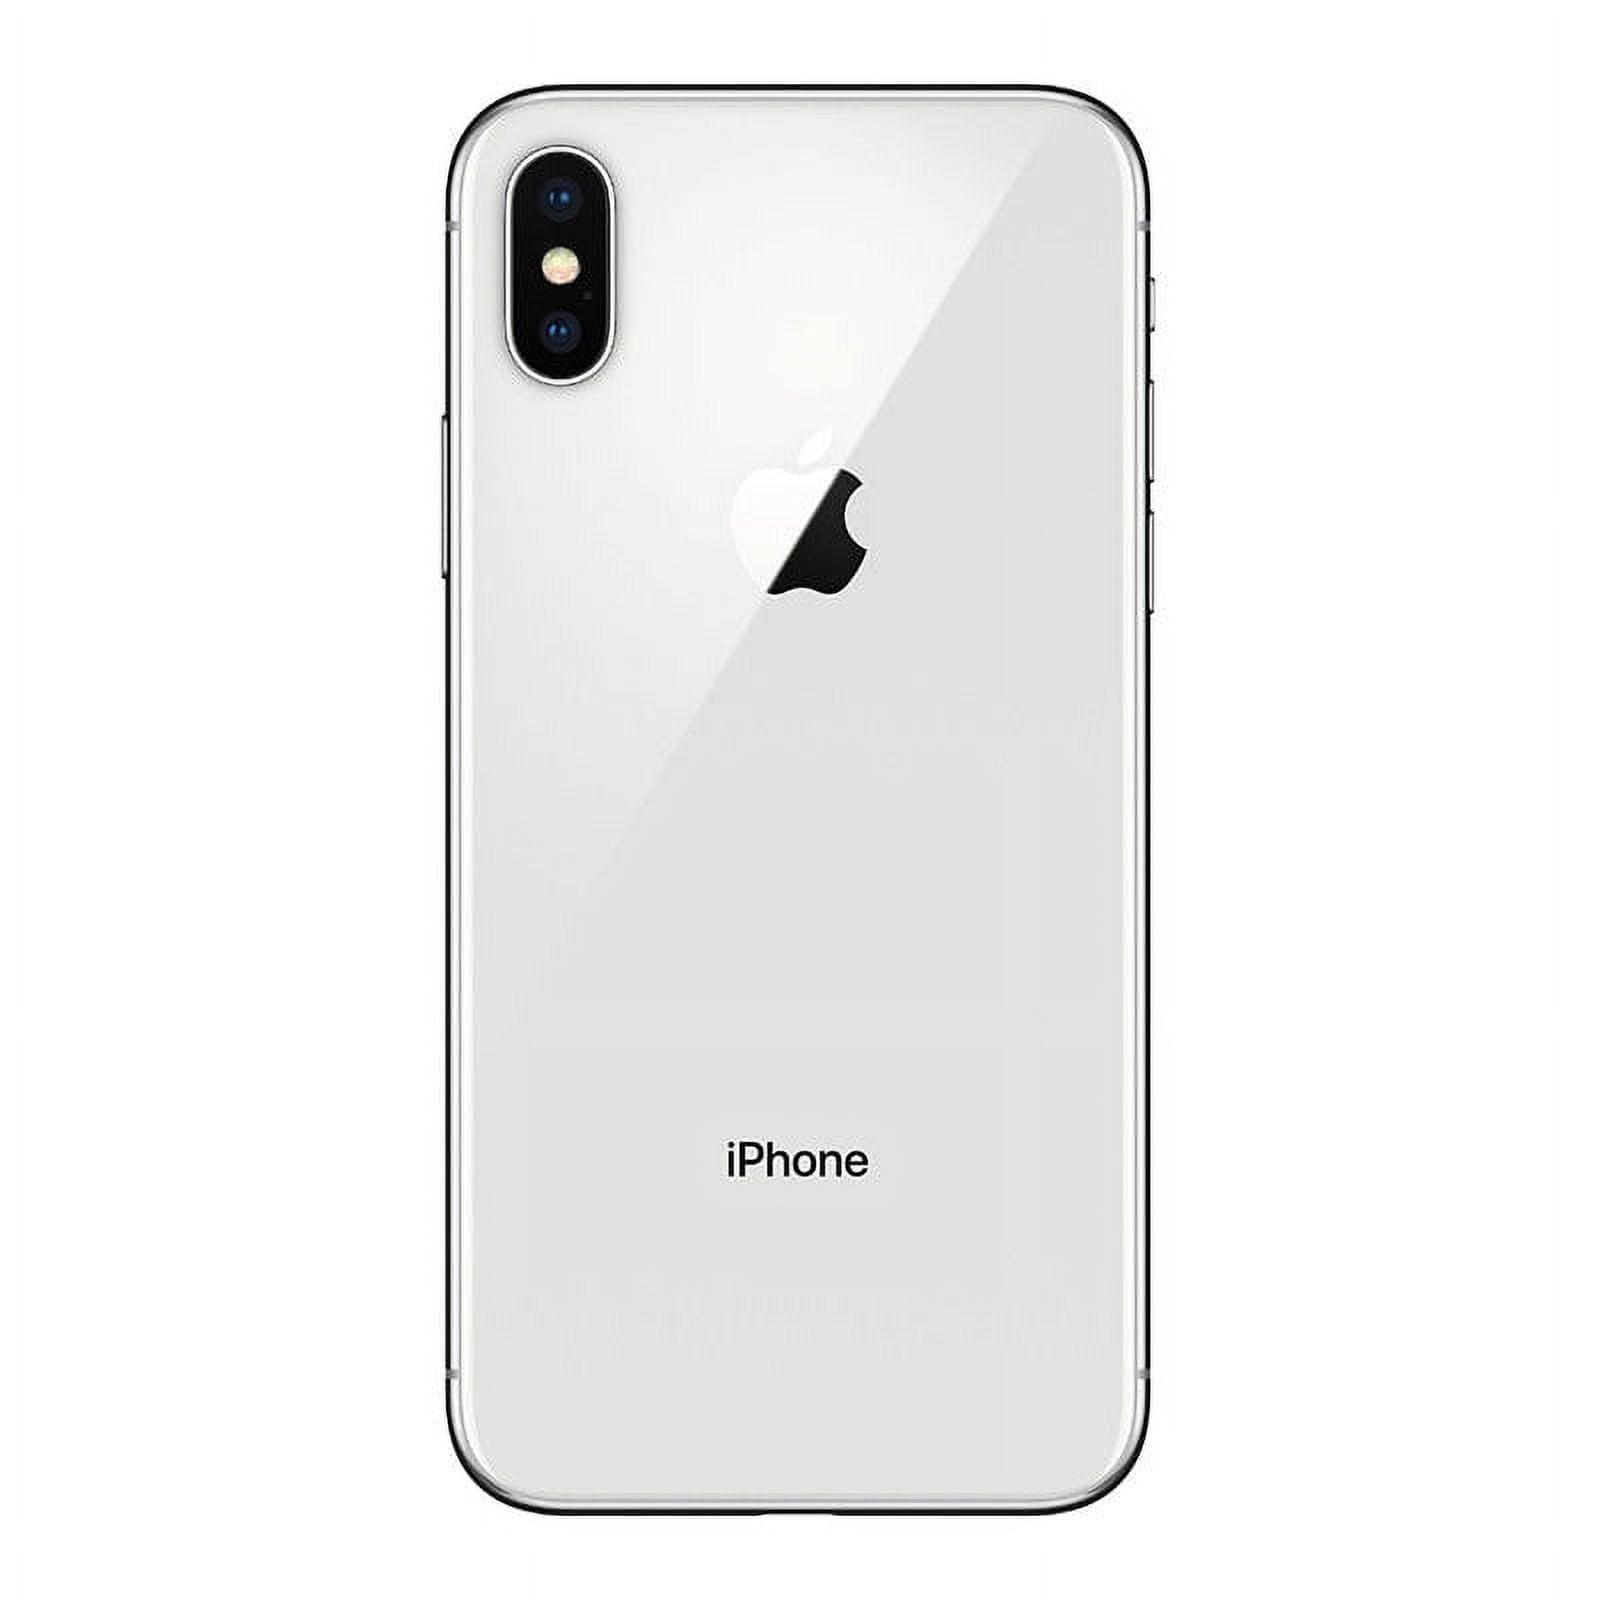 Apple iPhone X 256GB Factory Unlocked Smartphone Italy